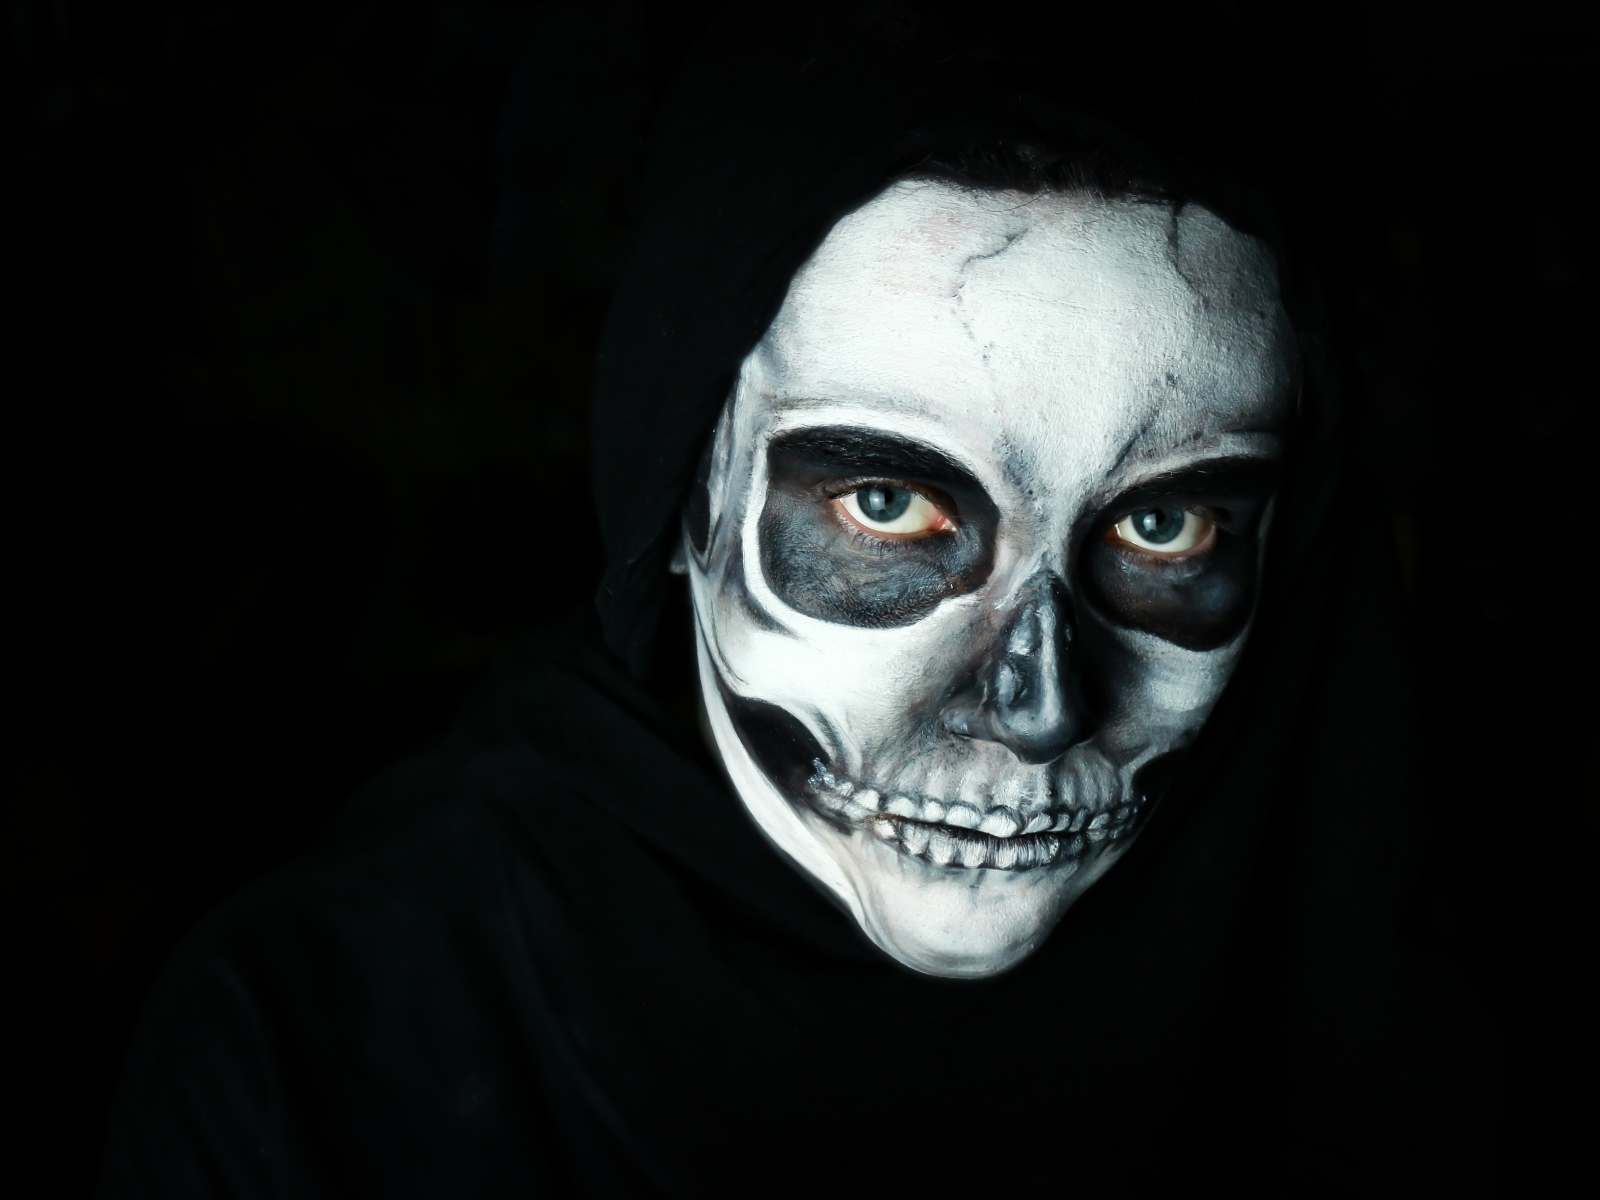 Девушка с маской с грима на лице на черном фоне